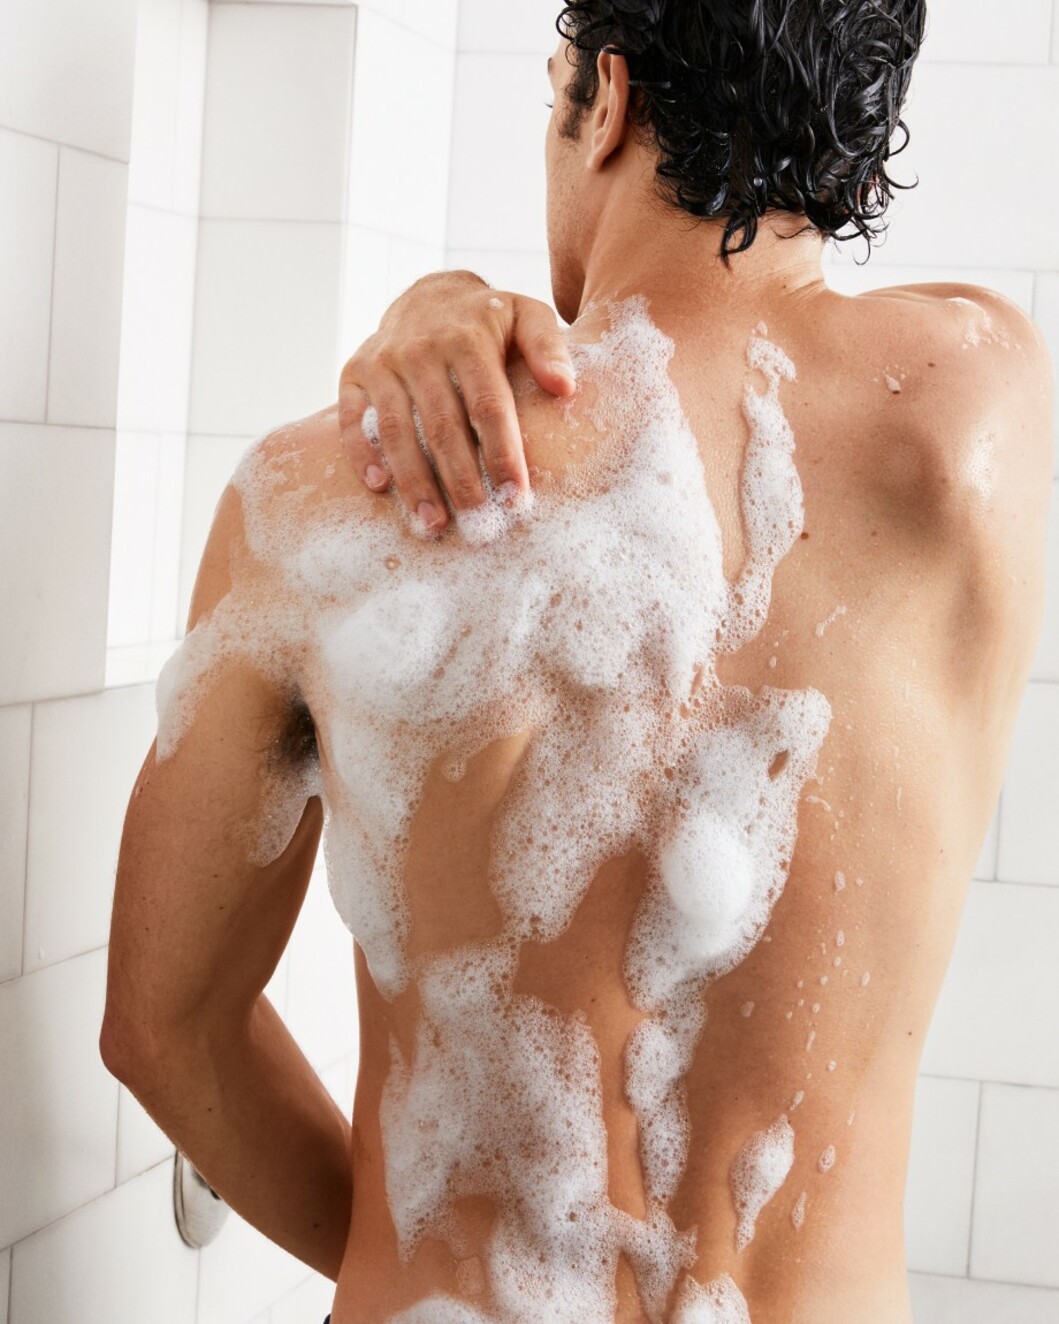 Man Hand Washing Image & Photo (Free Trial)